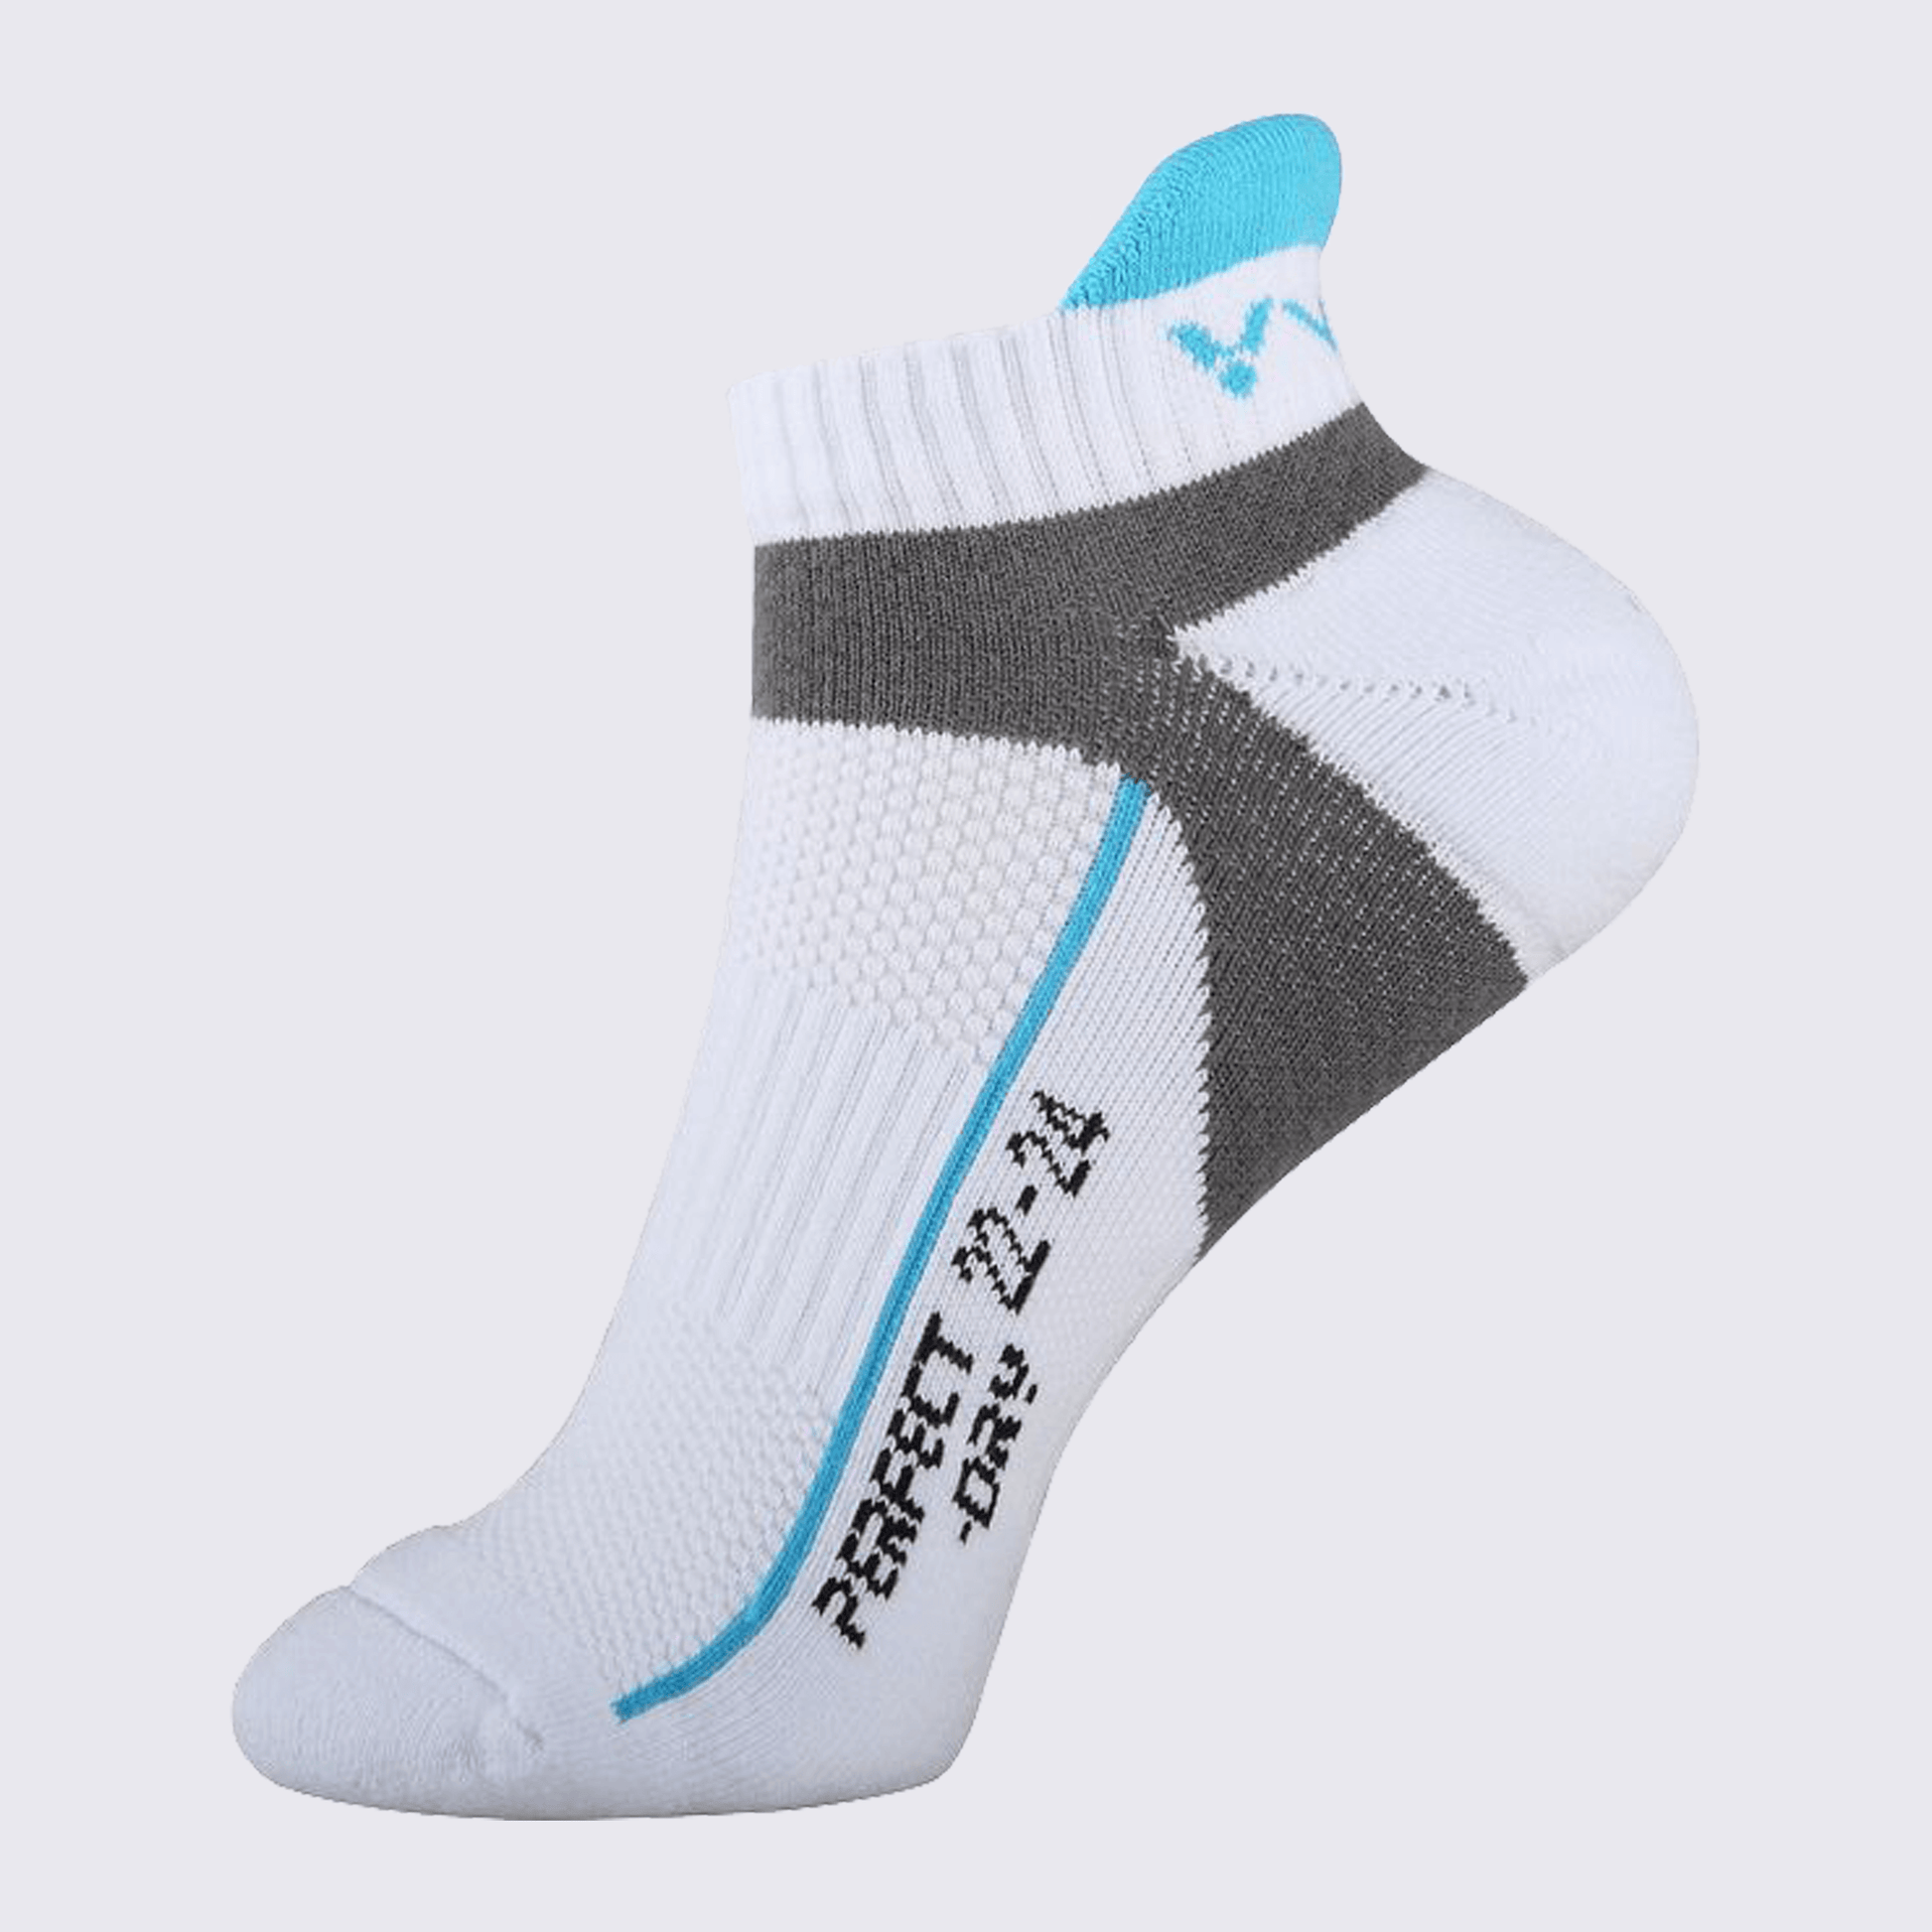 Victor Women's Sports Socks Medium SK244M (Light Blue)